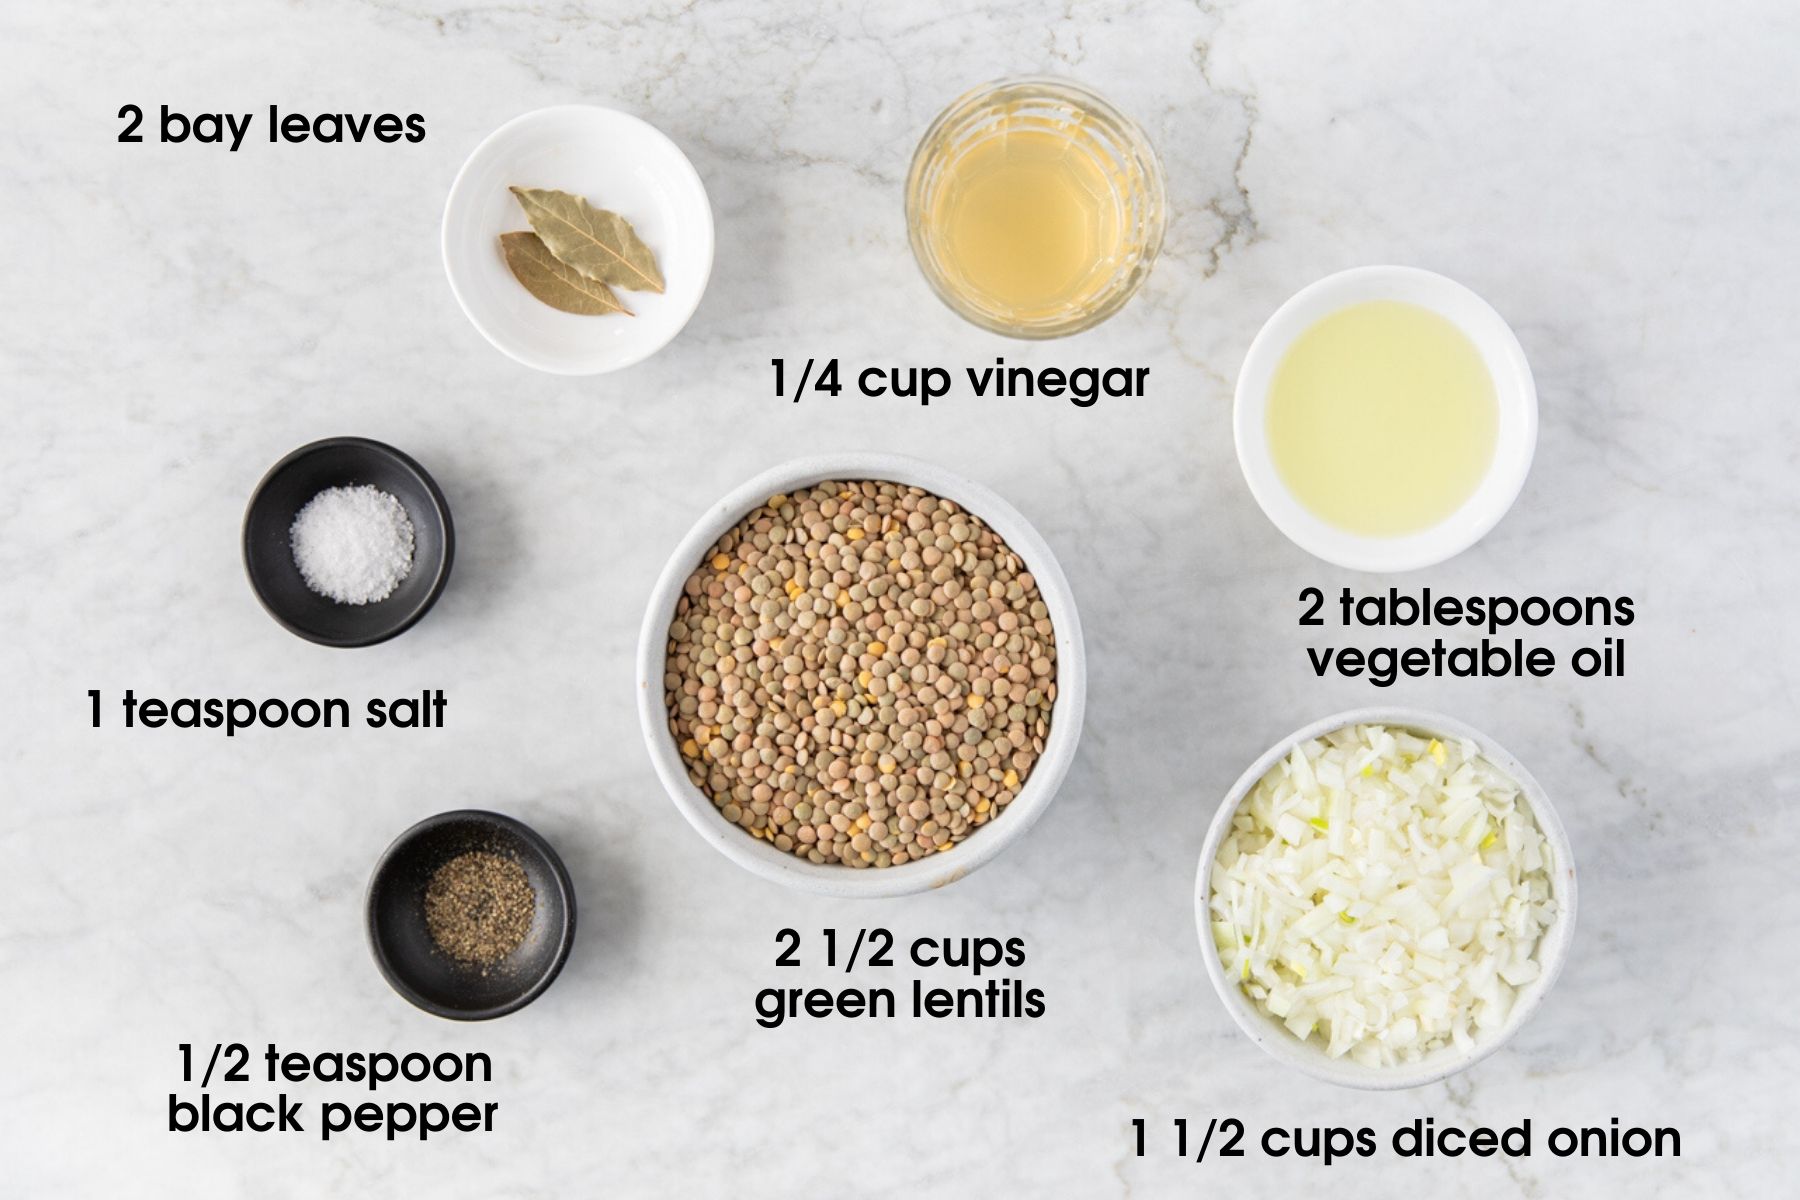 Ingredients for sweet sour one-pot green lentils: bay leaves, vinegar, vegetable oil, onion, green lentils, black pepper, and salt